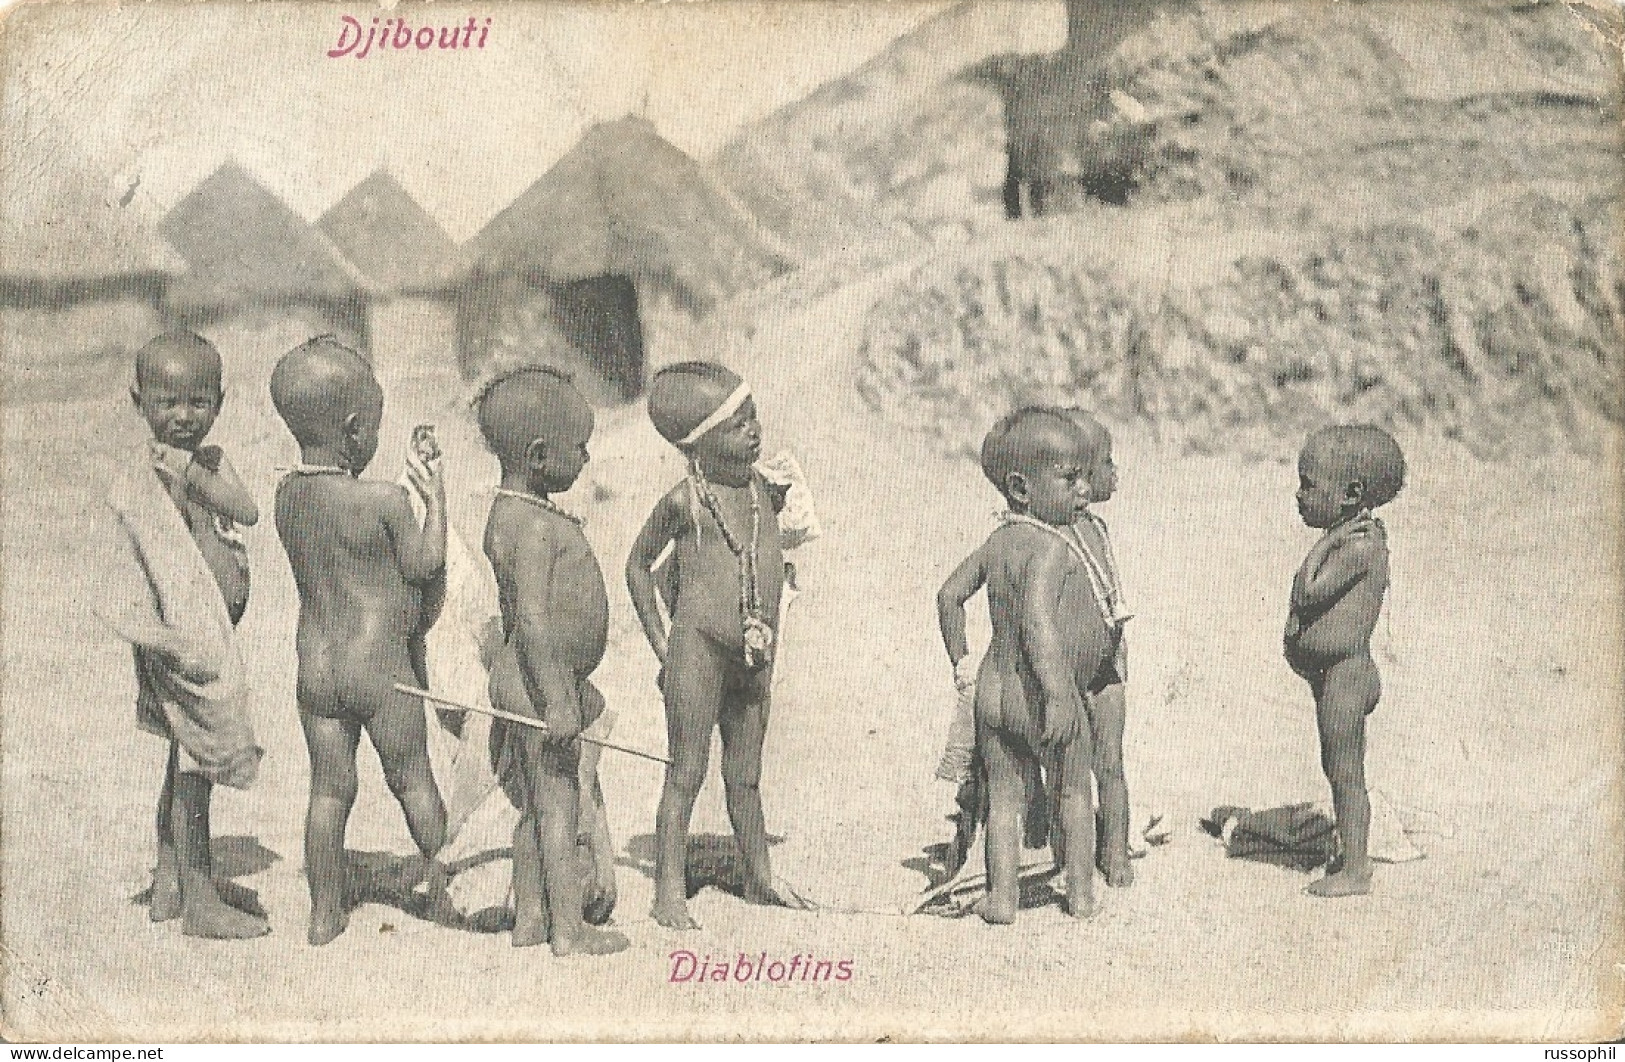 DJIBOUTI - DIABLOTINS - 1904 - Afrique